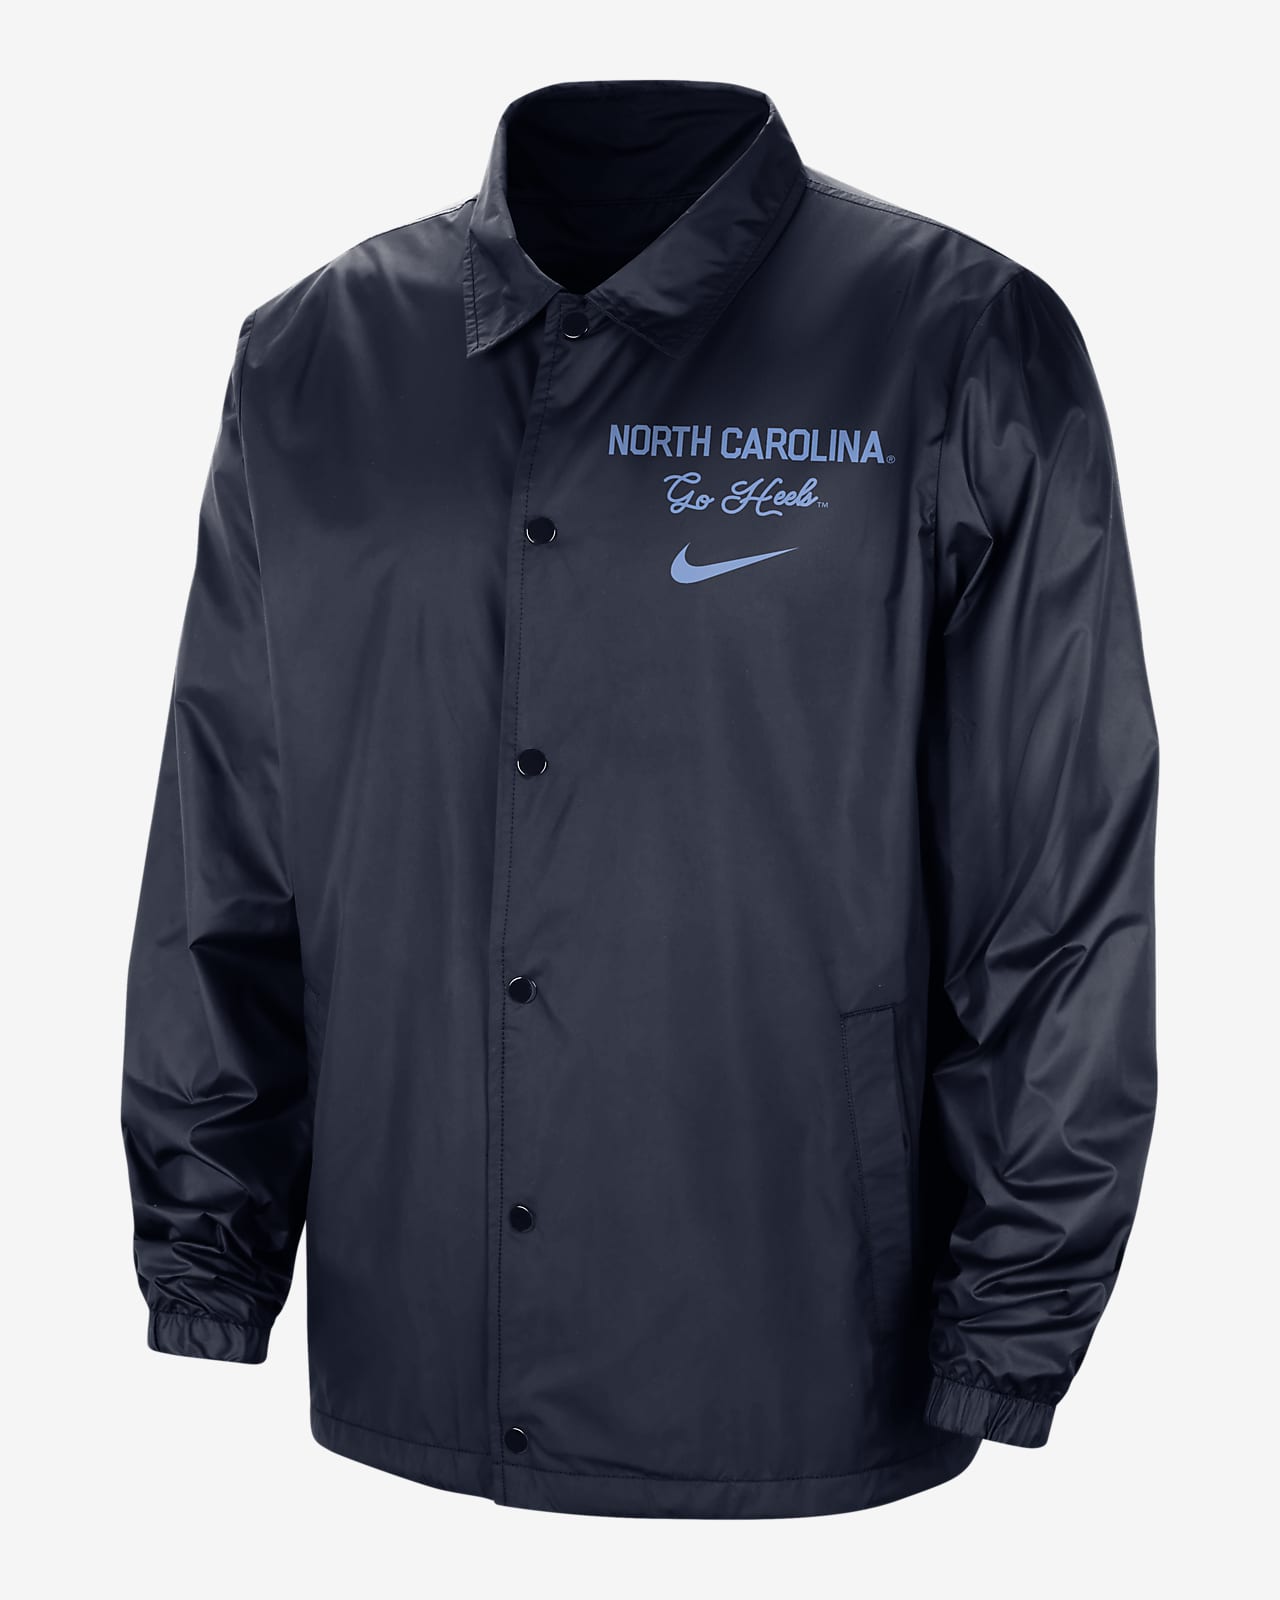 UNC Men's Nike College Jacket